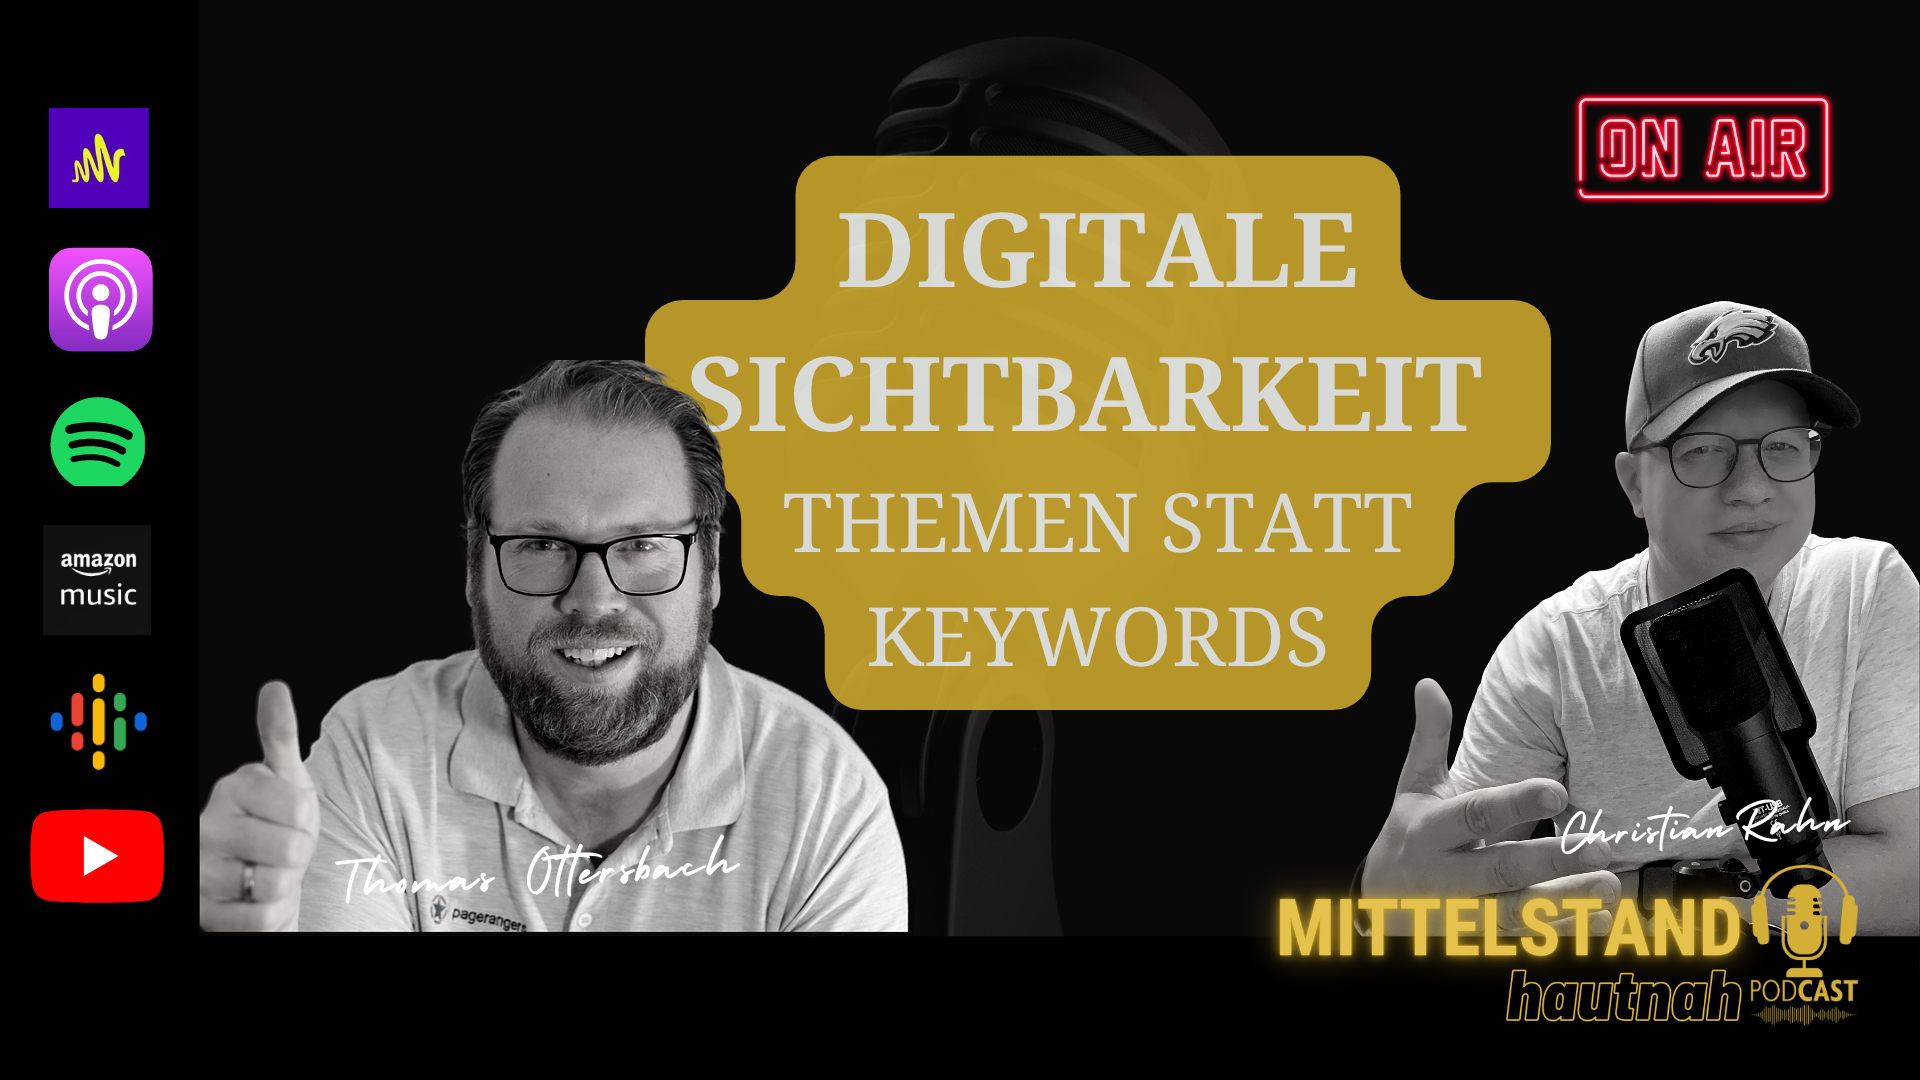 Digitale Sichtbarkeit digitales Unternehmertum Thomas Ottersbach Christian Rahn SEO Marketing